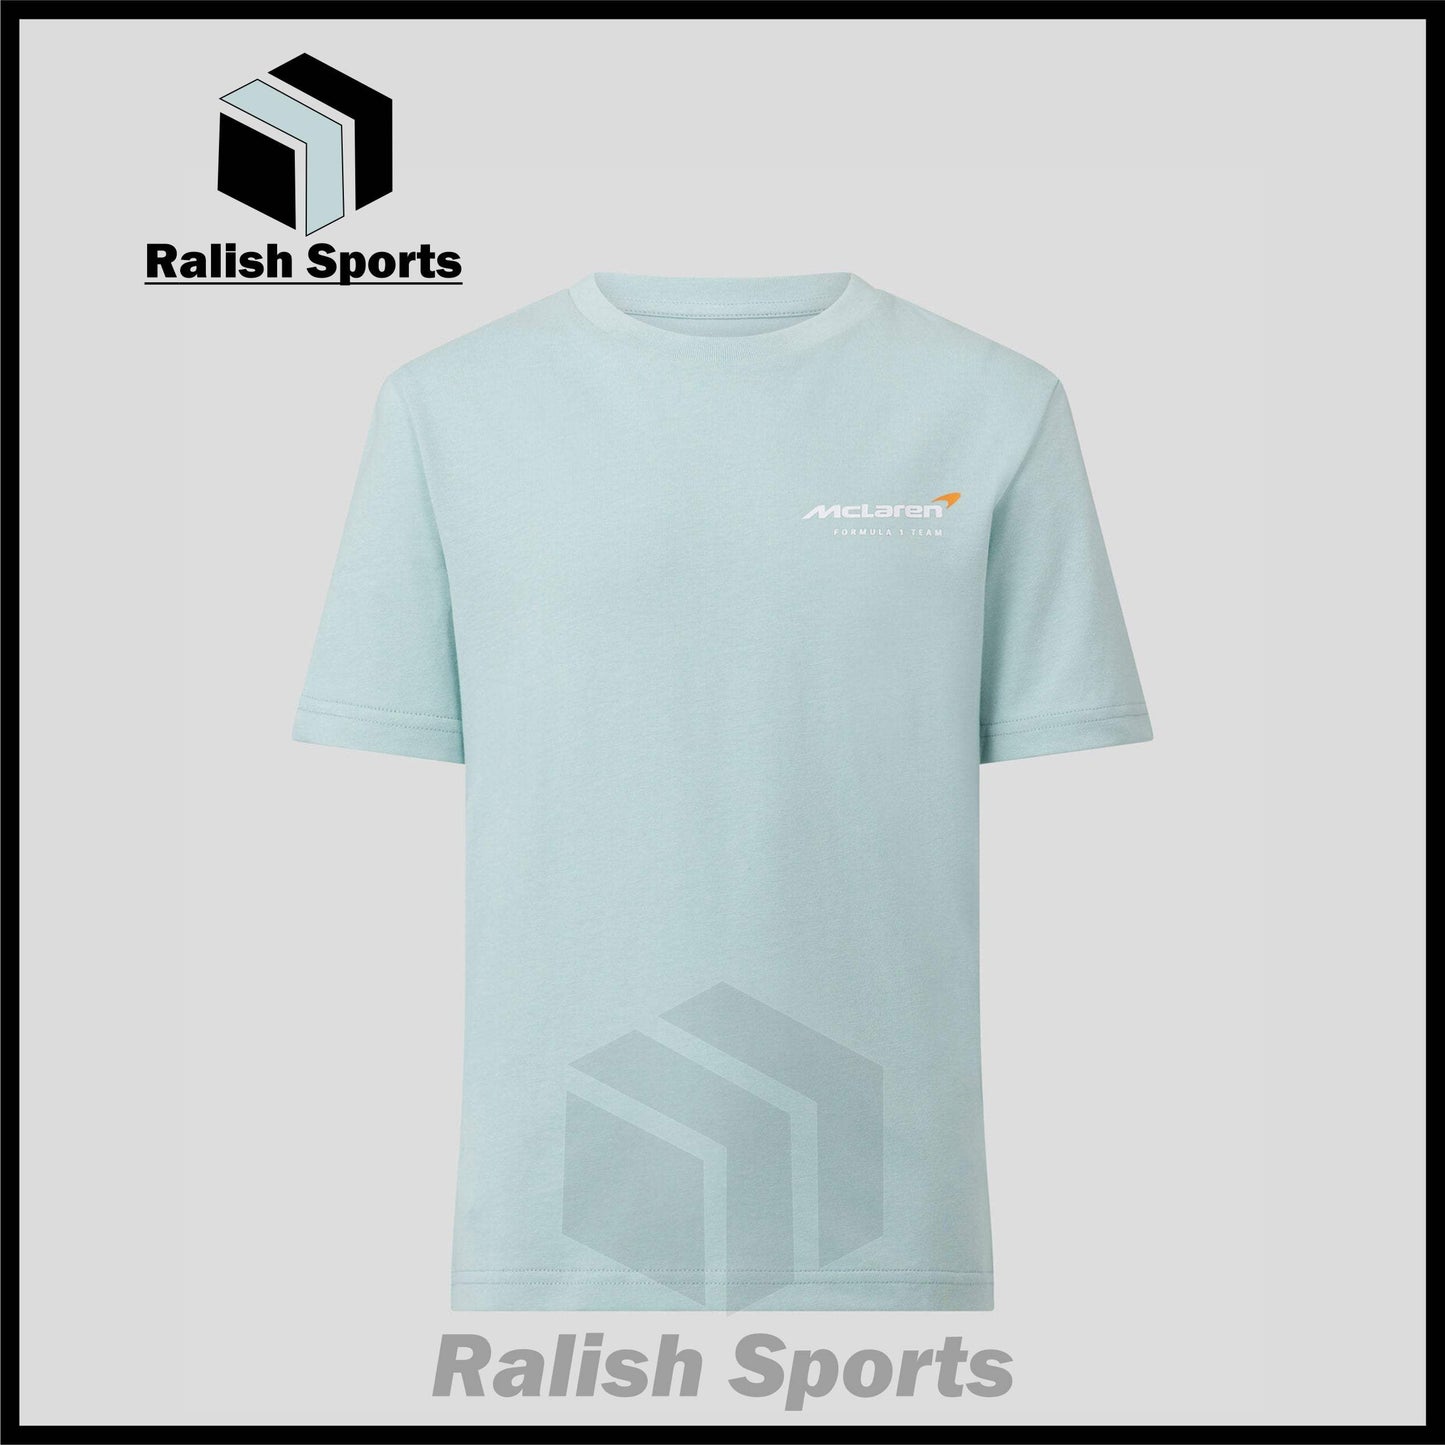 McLaren F1 Dynamic Graphic T-shirt - Ralish Sports